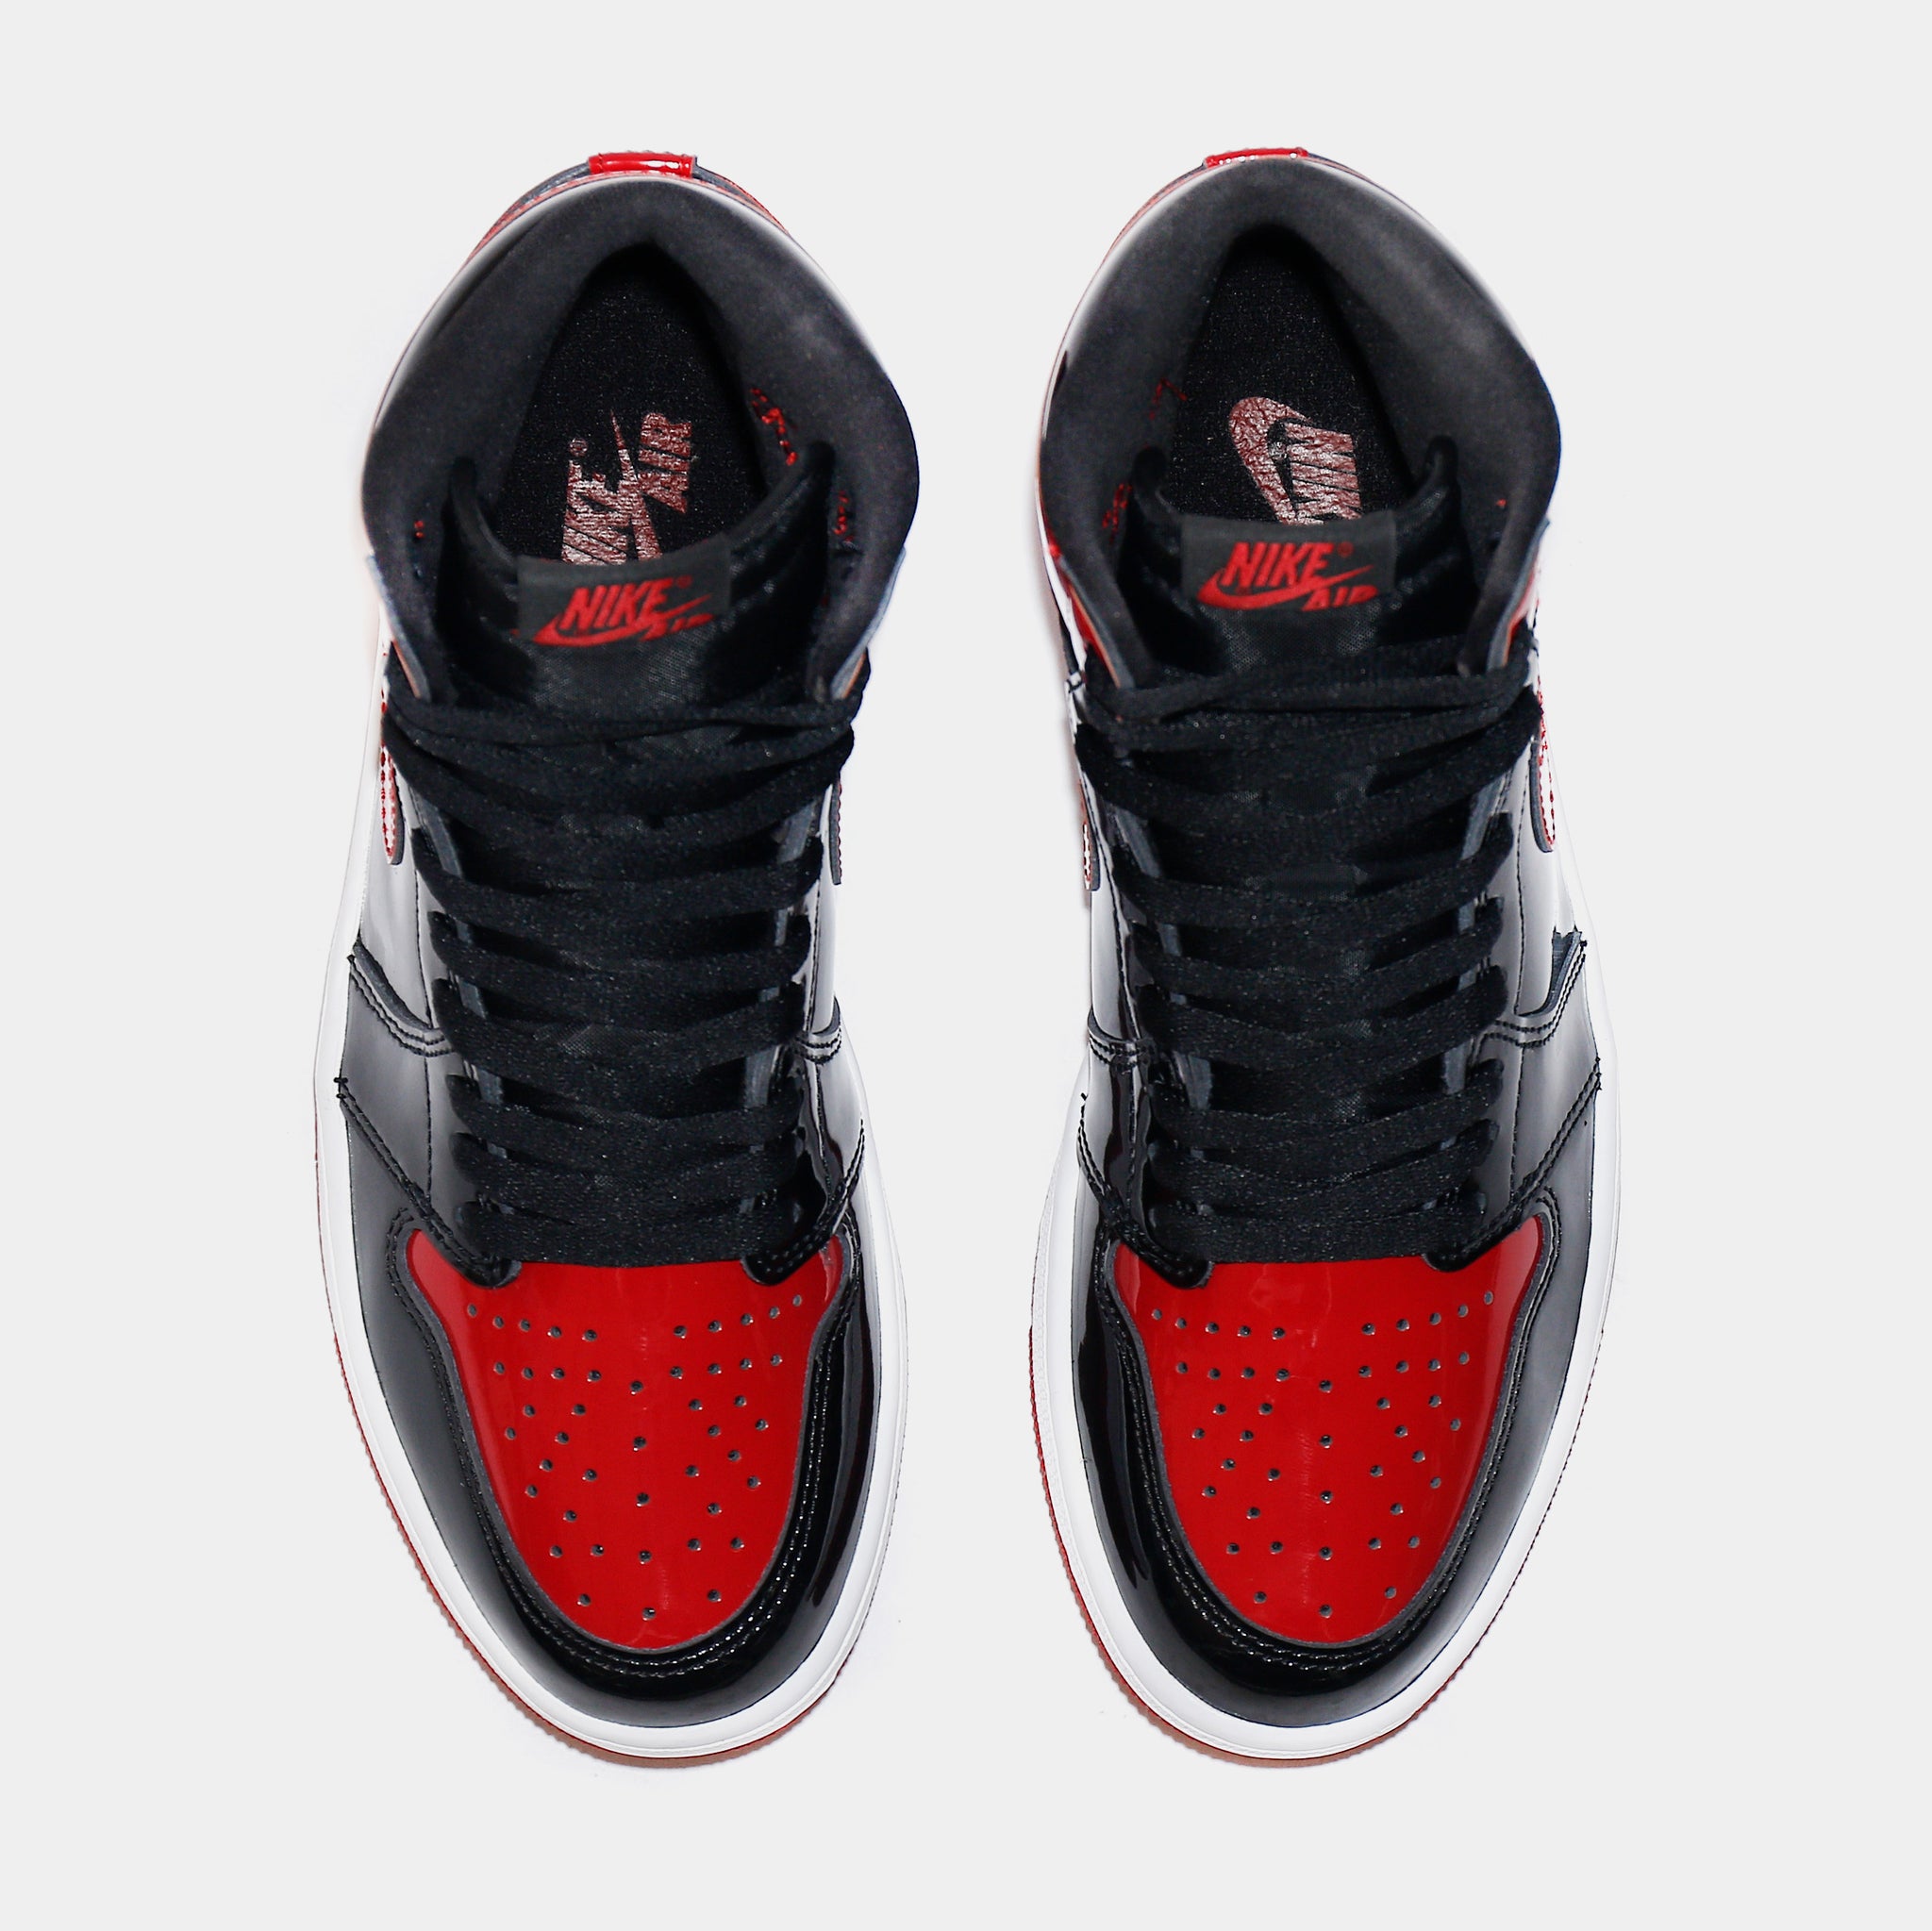 Jordan Air Jordan 1 High OG Patent Bred Mens Lifestyle Shoes Black